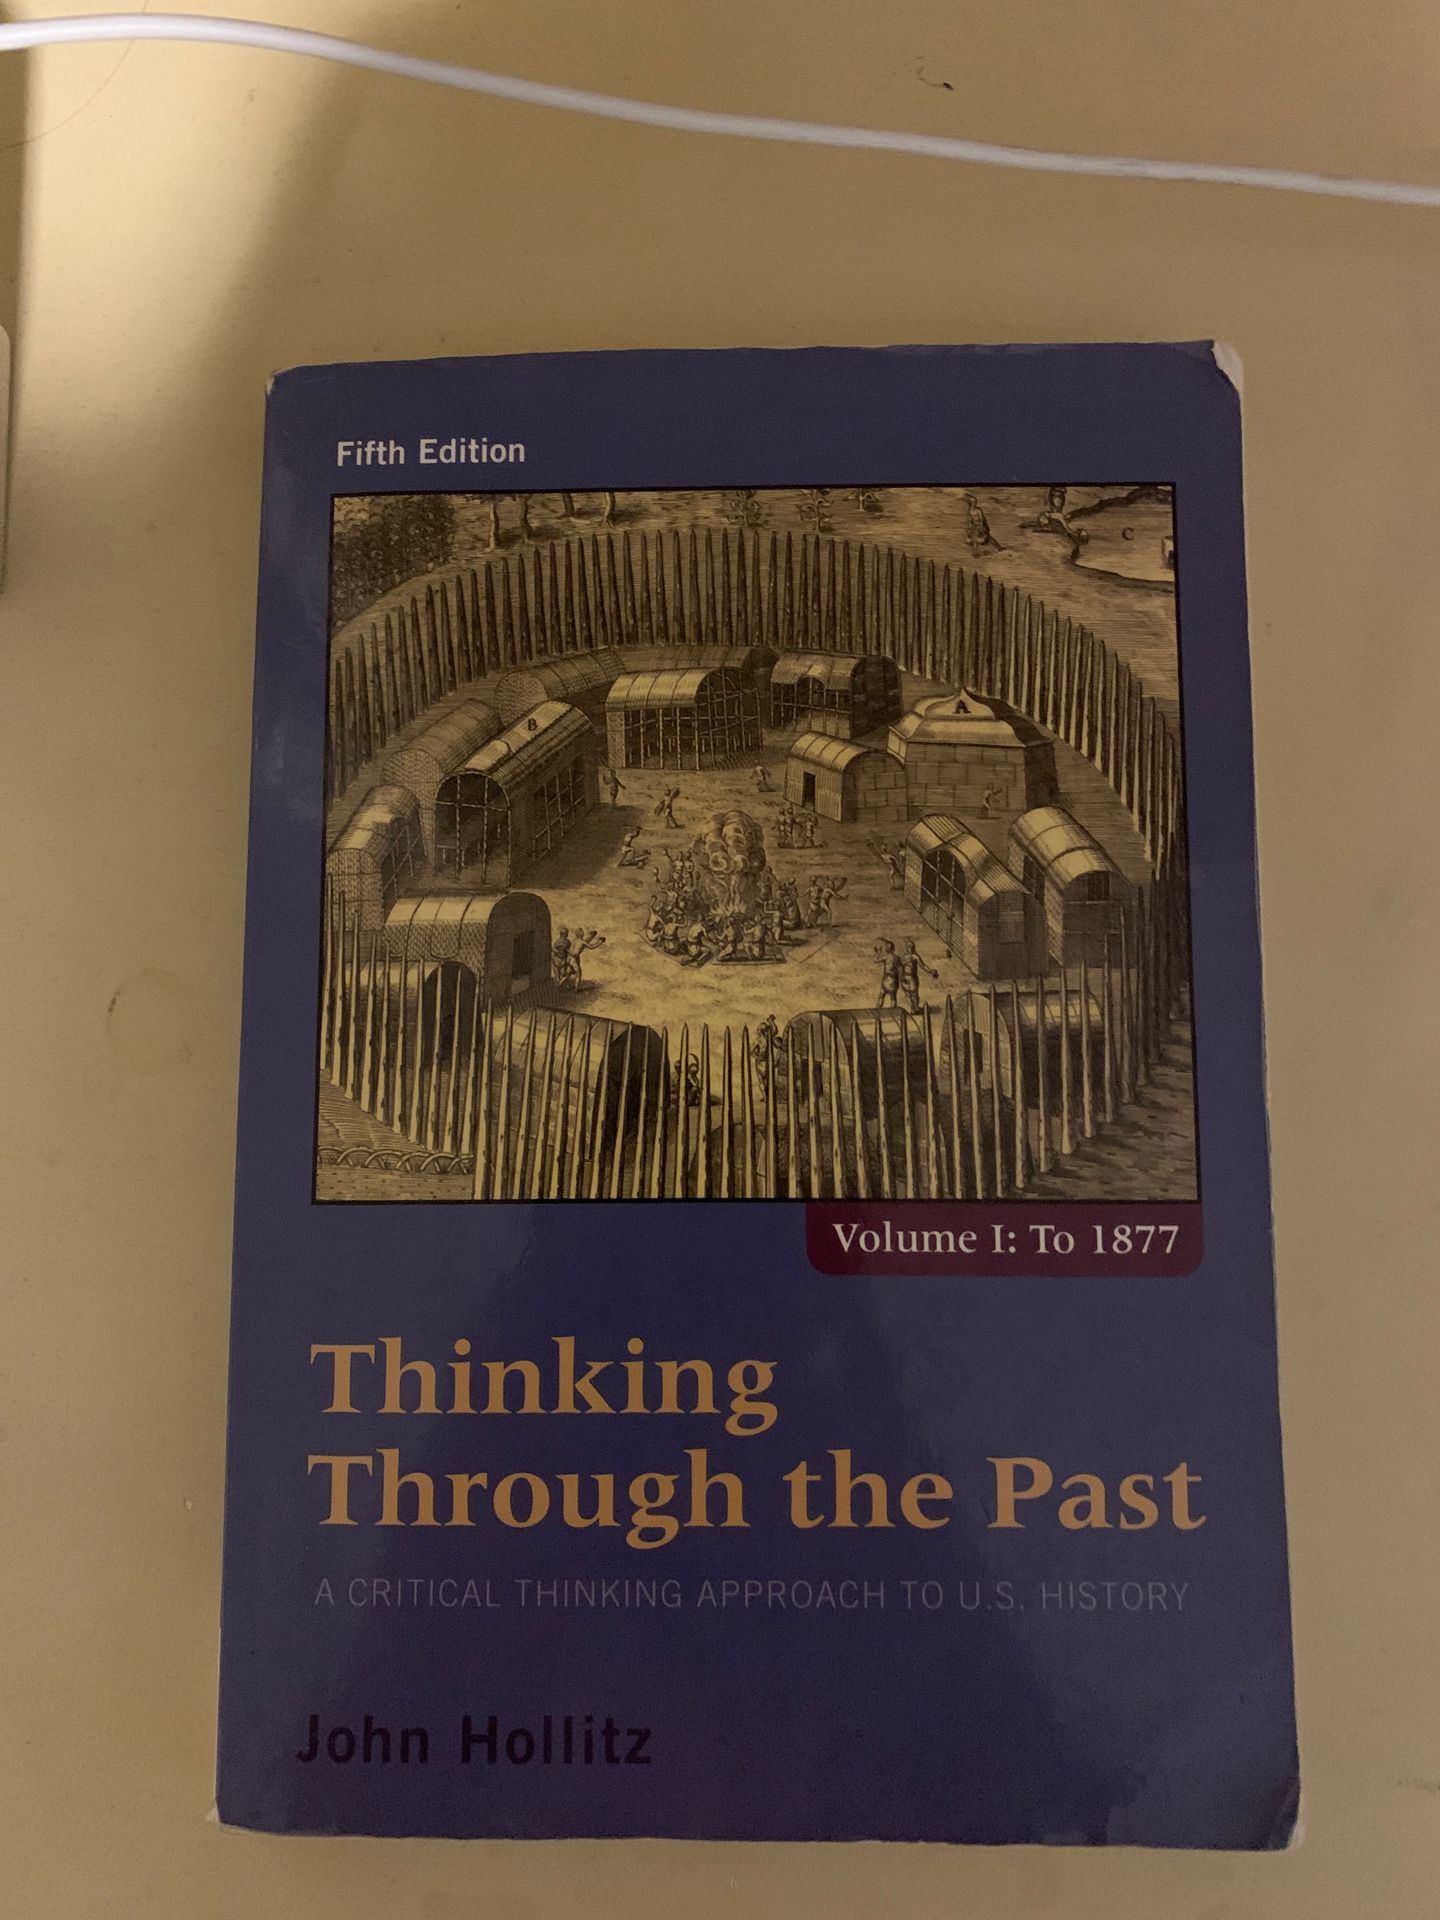 Thinking Through the Past John Hollitz book!